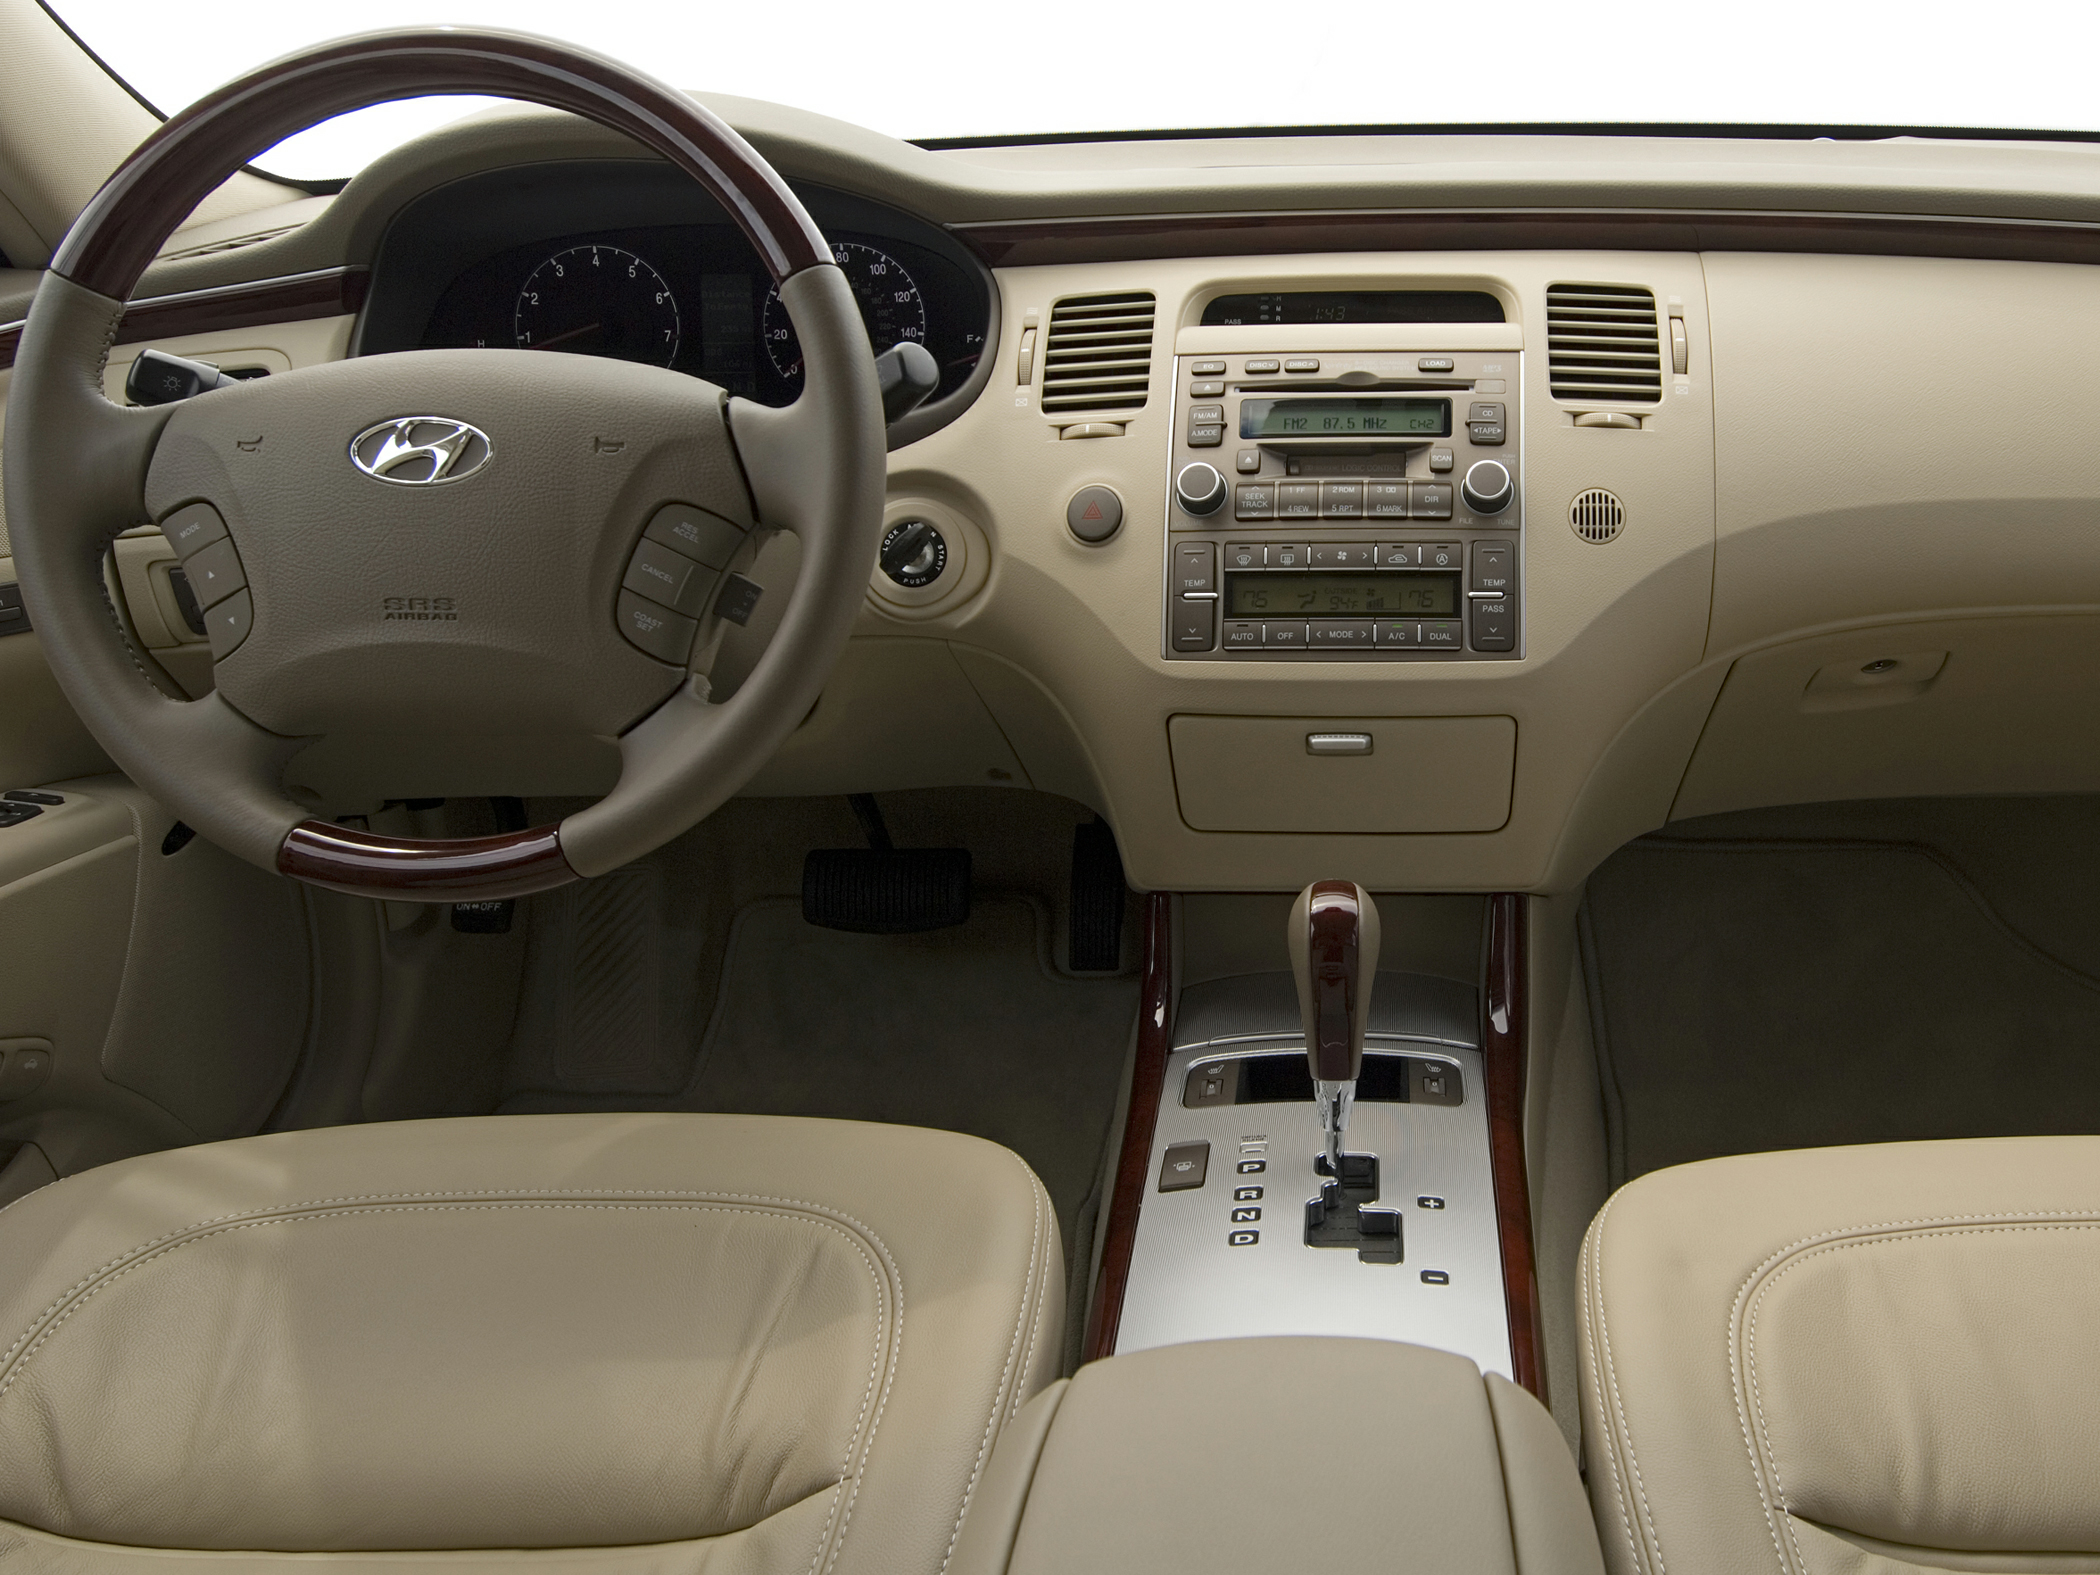 2007 Hyundai Azera